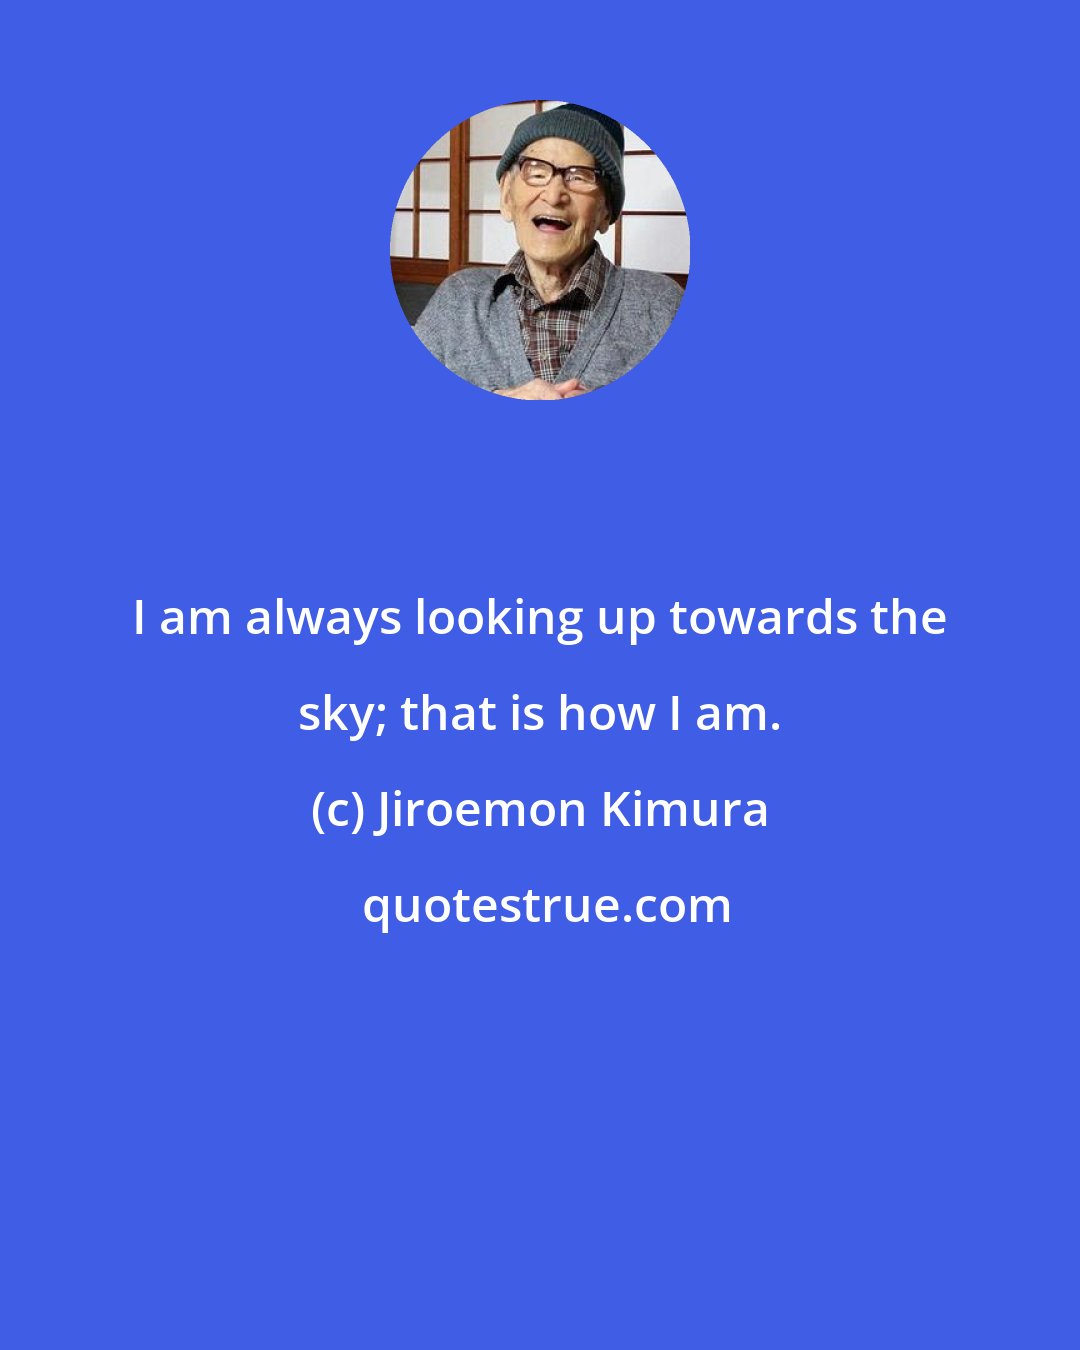 Jiroemon Kimura: I am always looking up towards the sky; that is how I am.